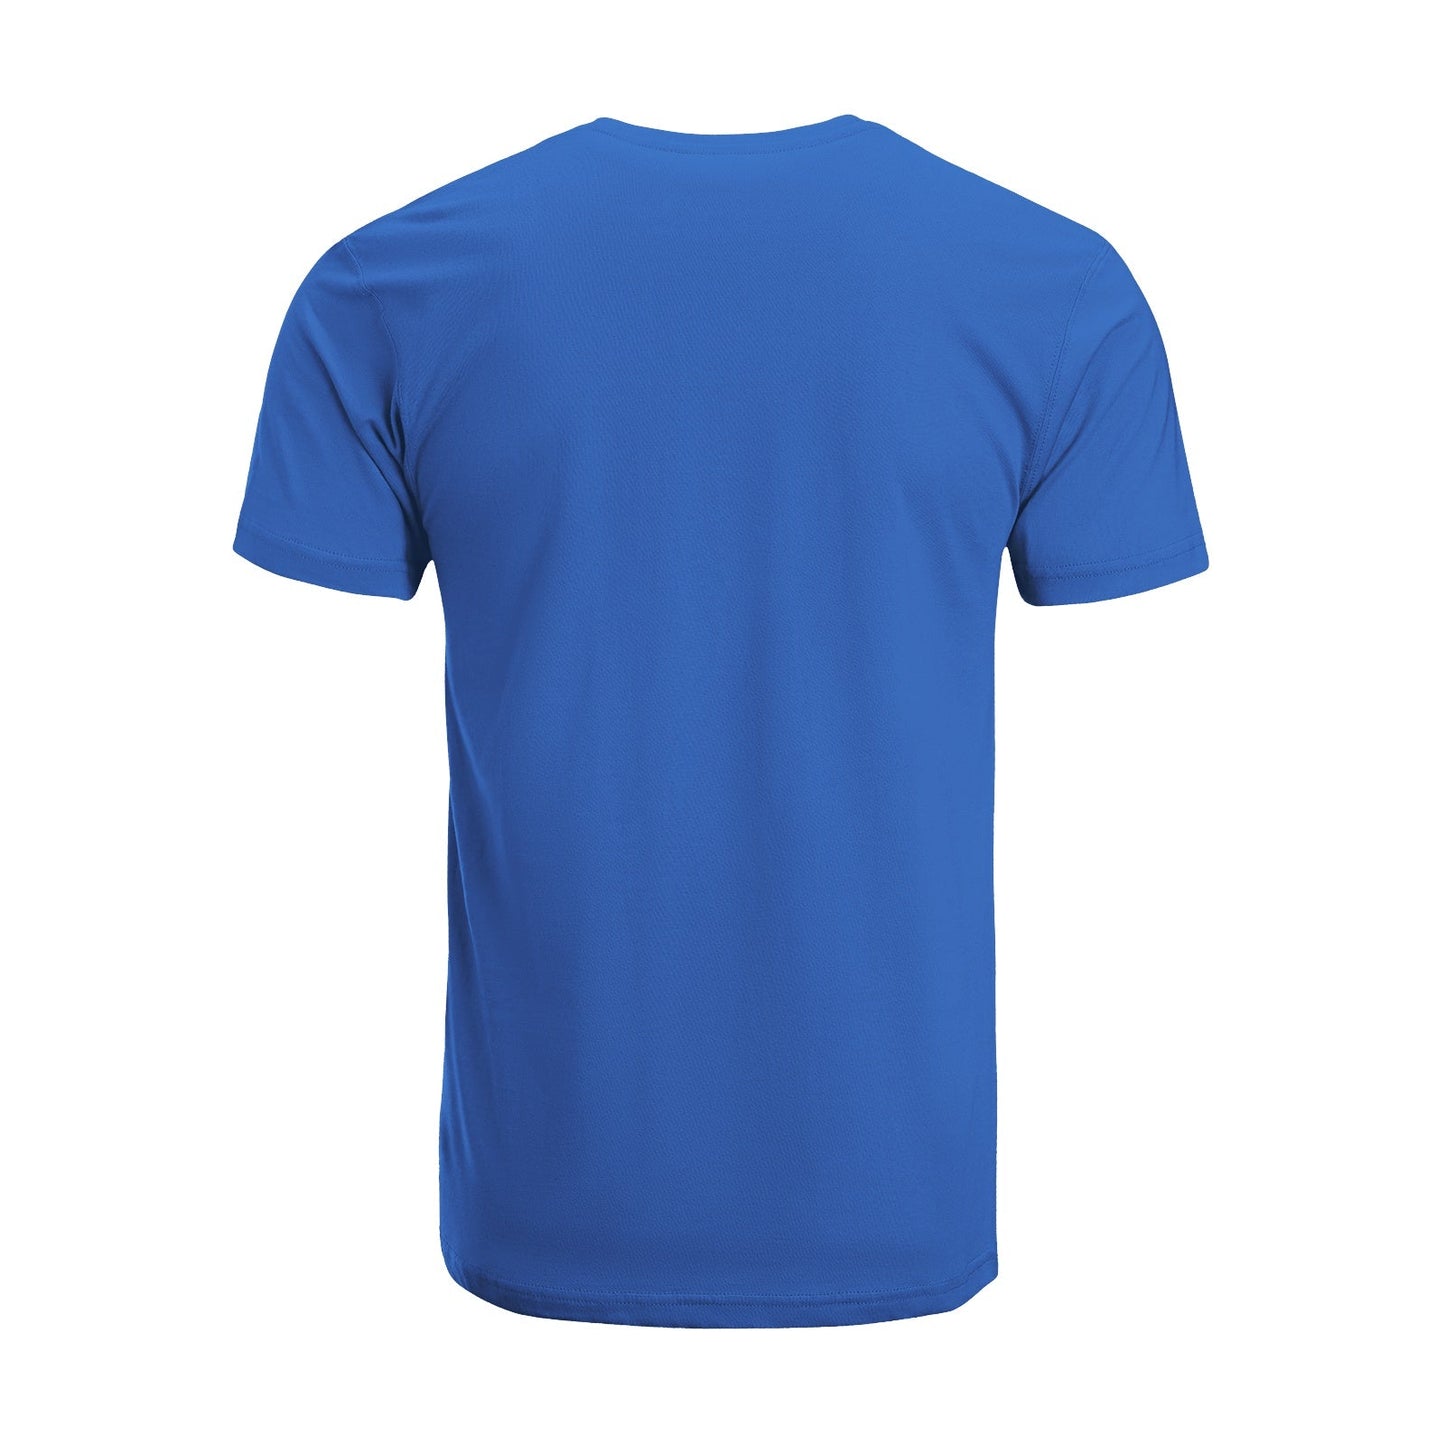 Unisex Short Sleeve Crew Neck Cotton Jersey T-Shirt Gym No. 12 - Tara-Outfits.com